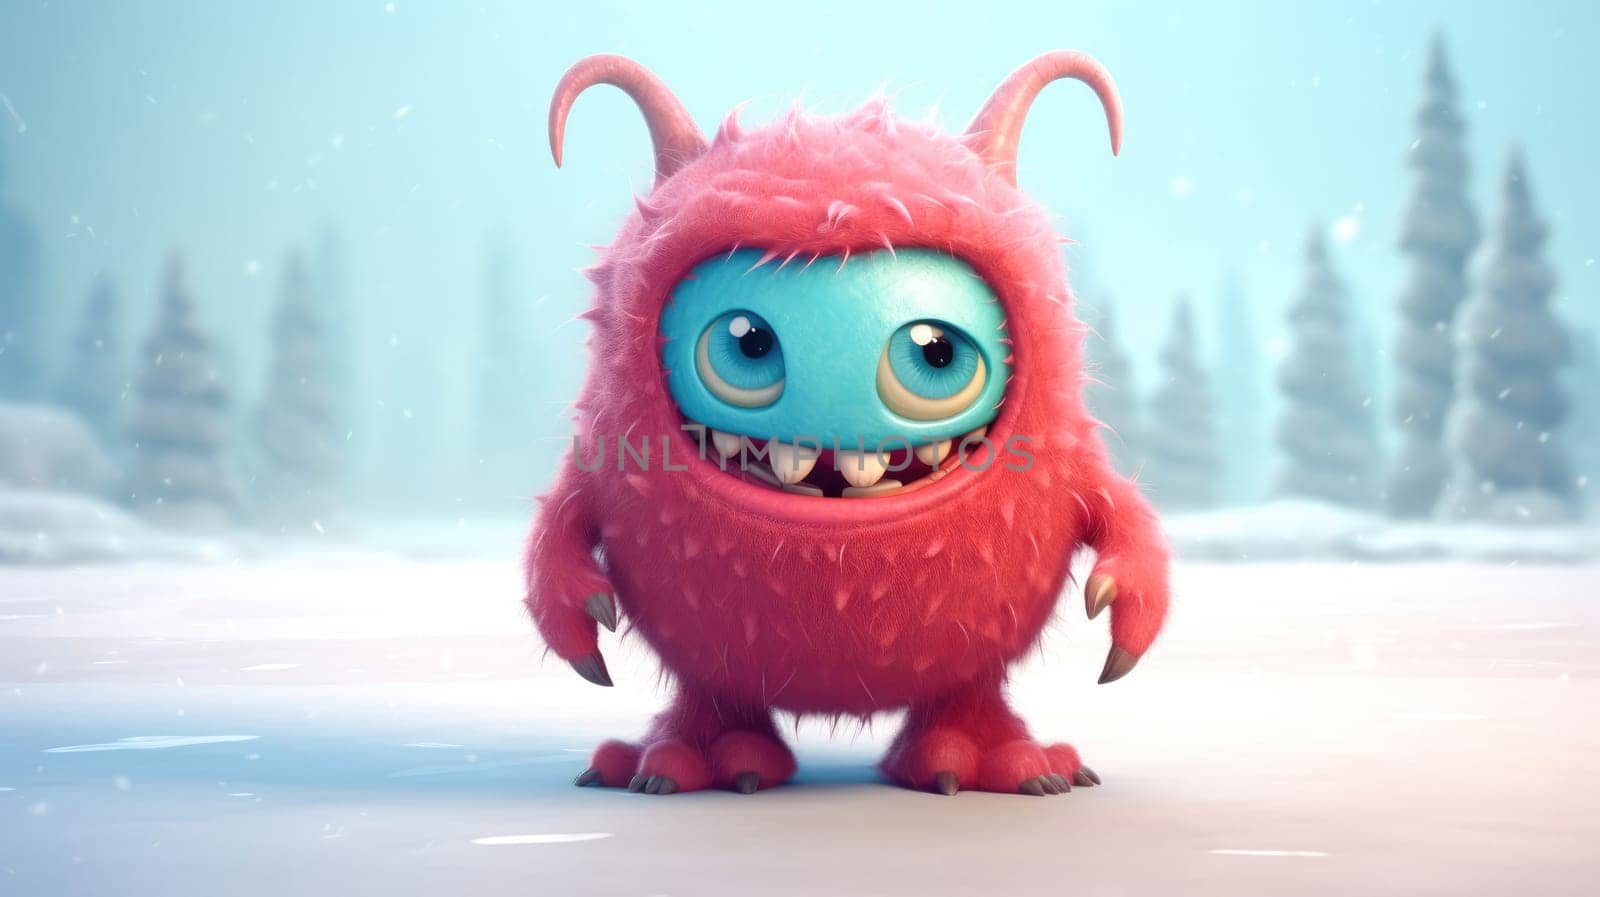 Cute Furry fluffy Red Monster, cartoon 3d, alien monster illustration, on winter background. by JuliaDorian